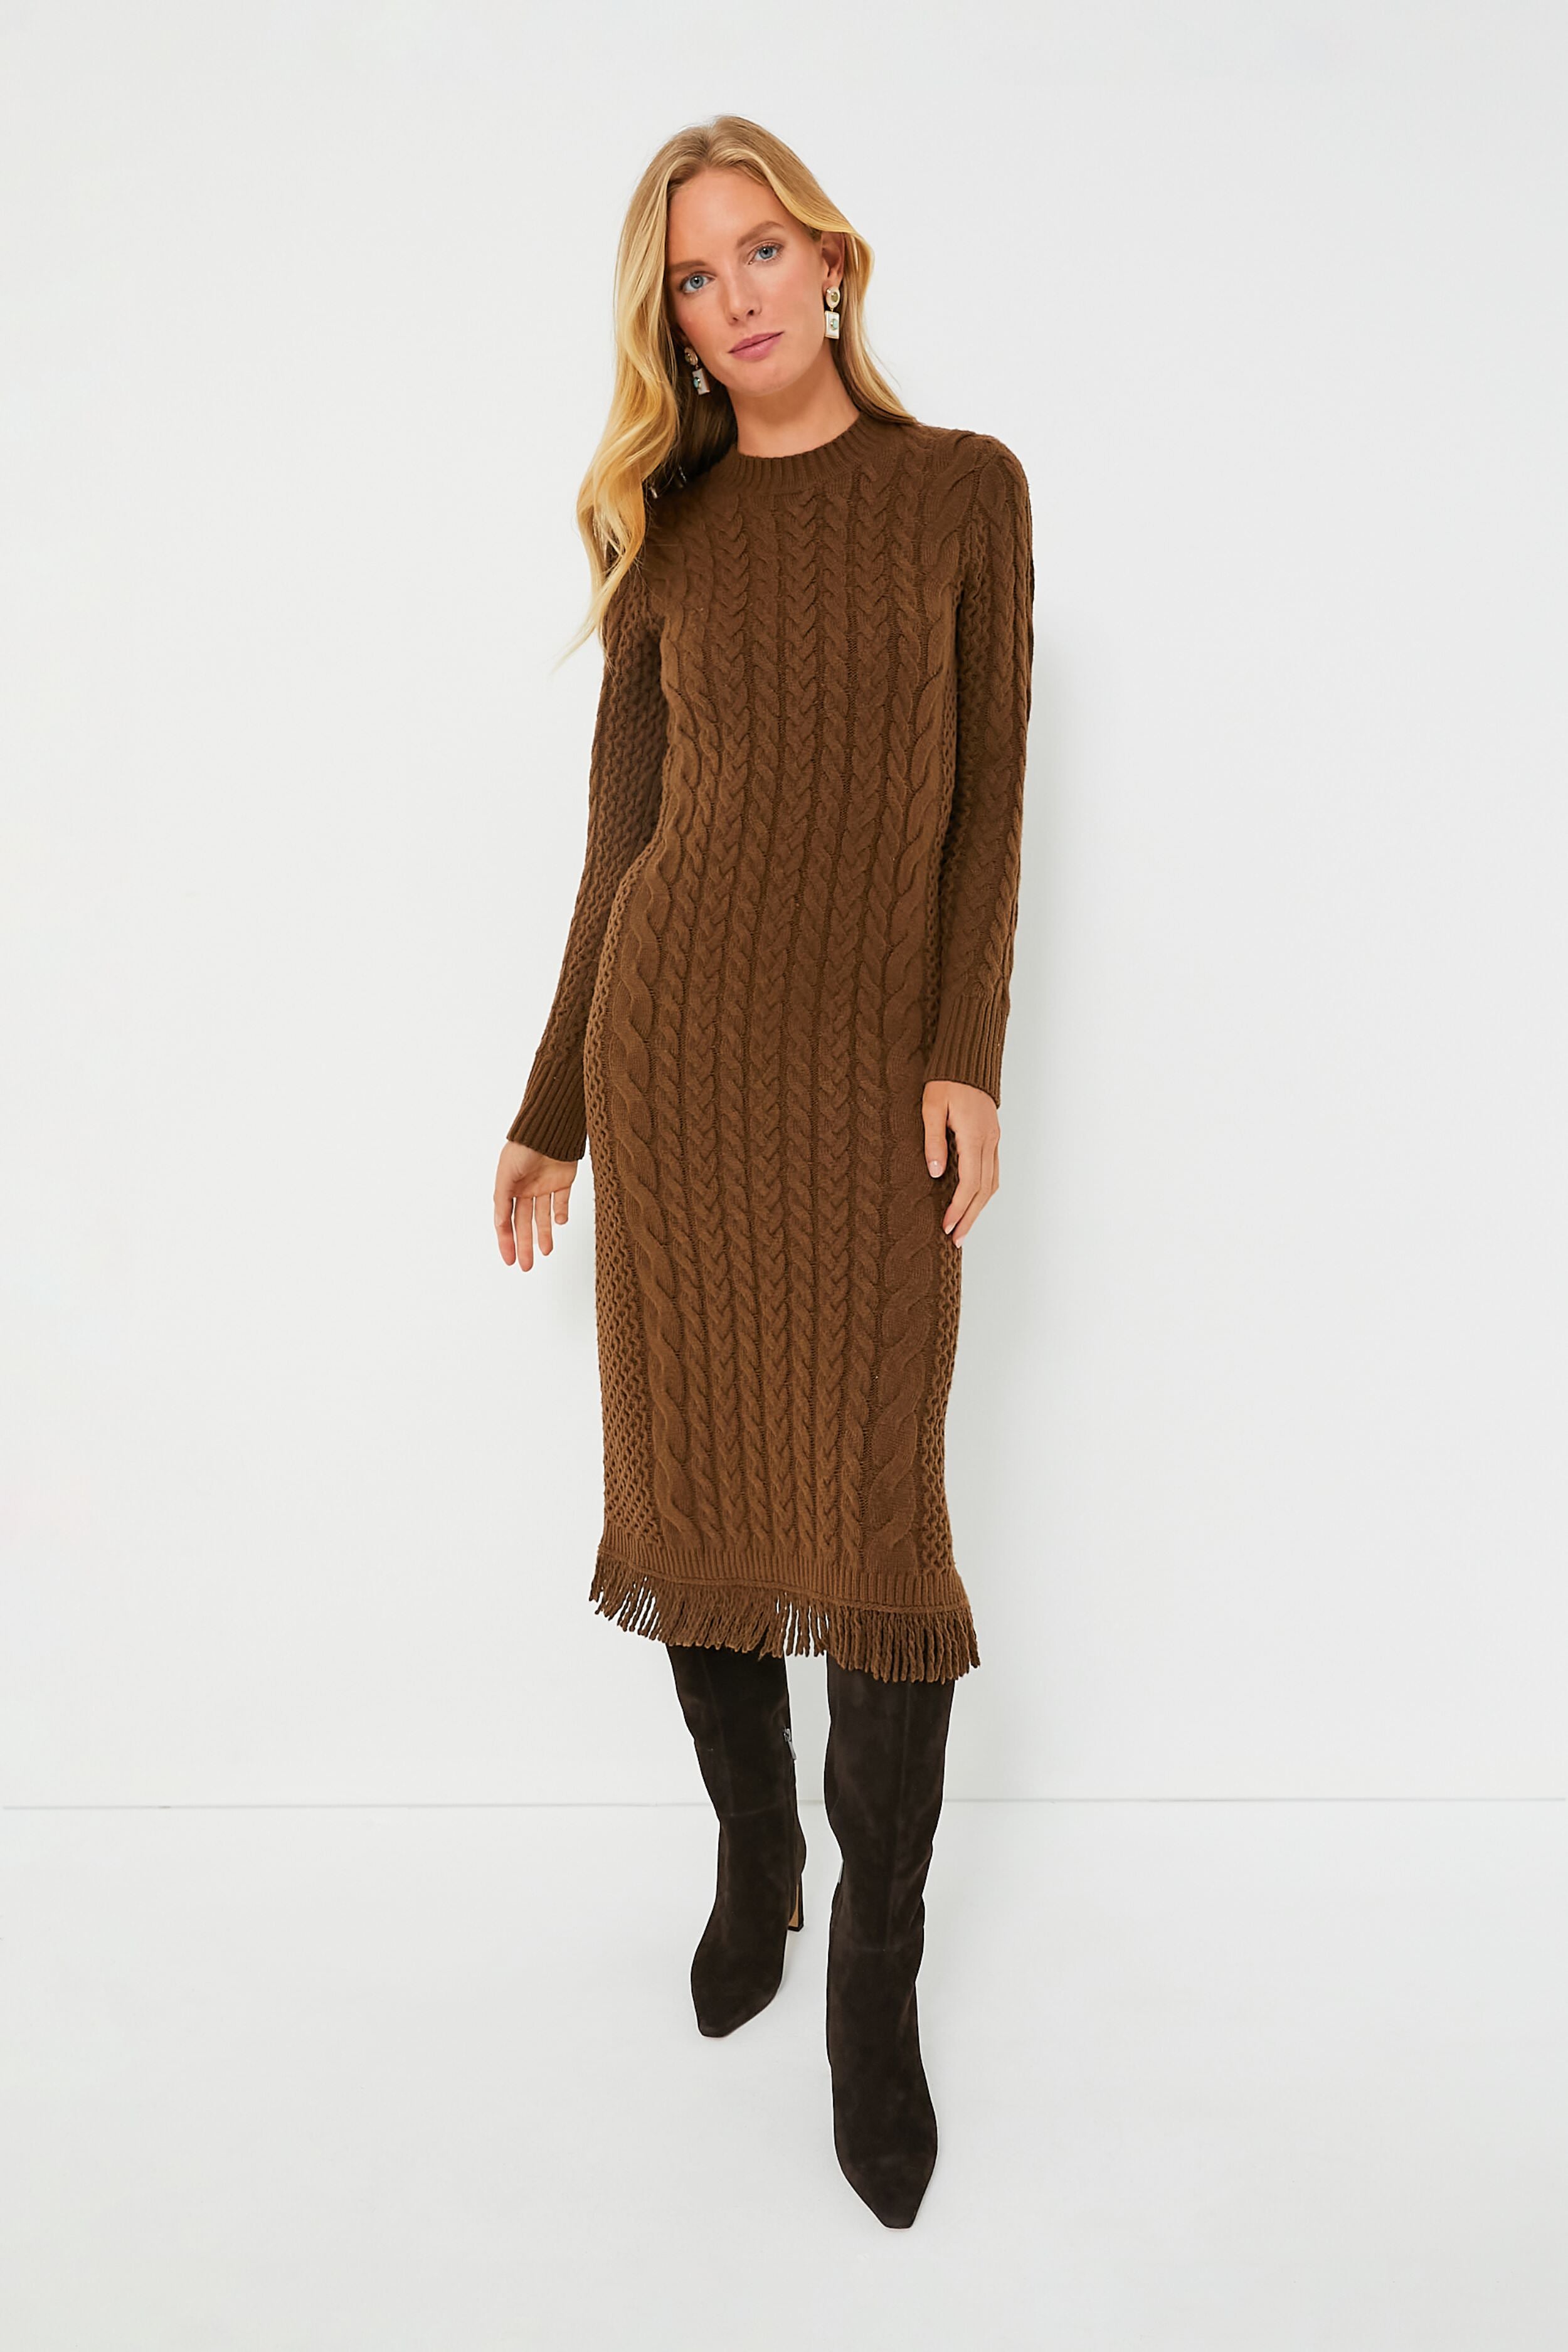 brown sweater dress